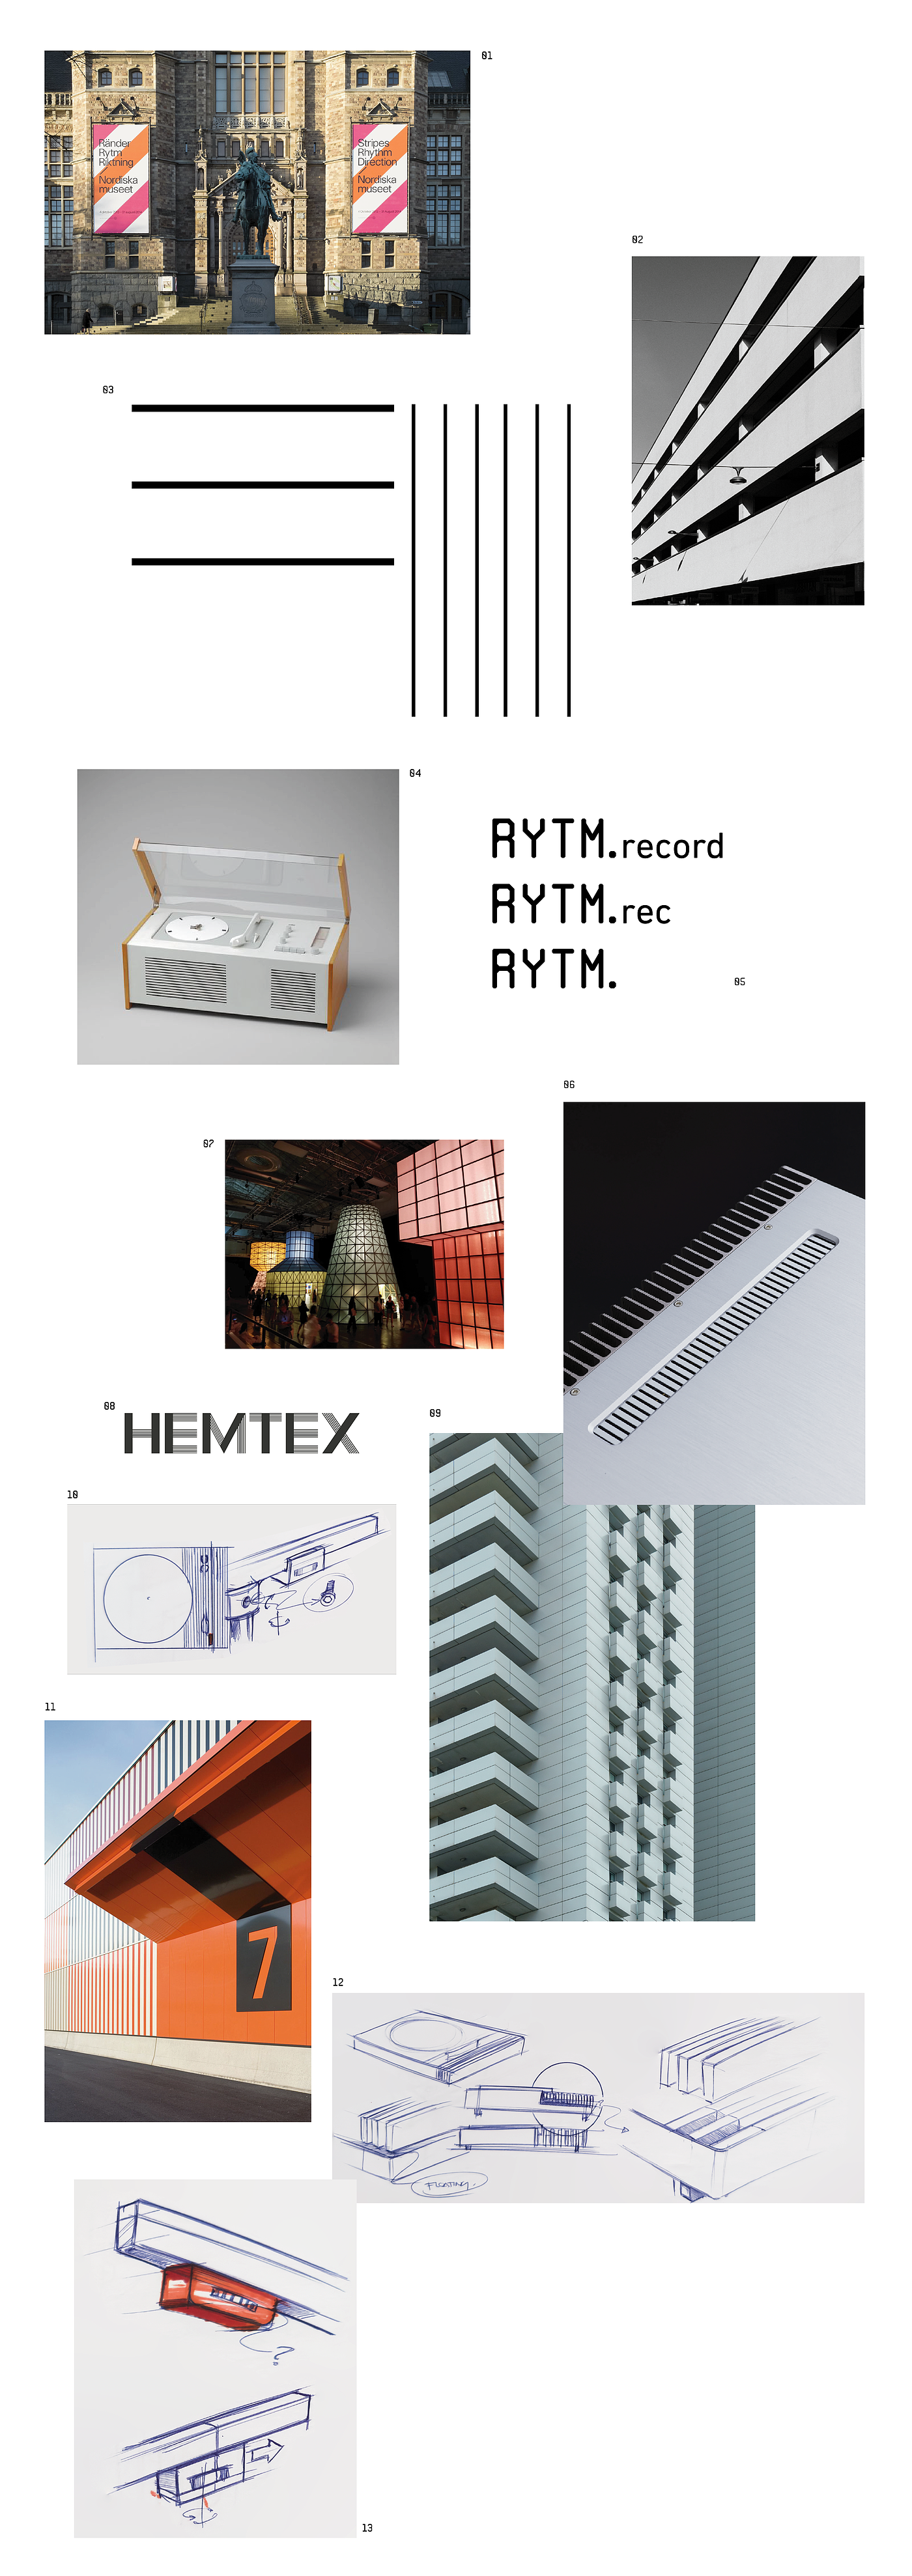 RYTM，音乐，产品设计，工业设计，用户体验，musica，